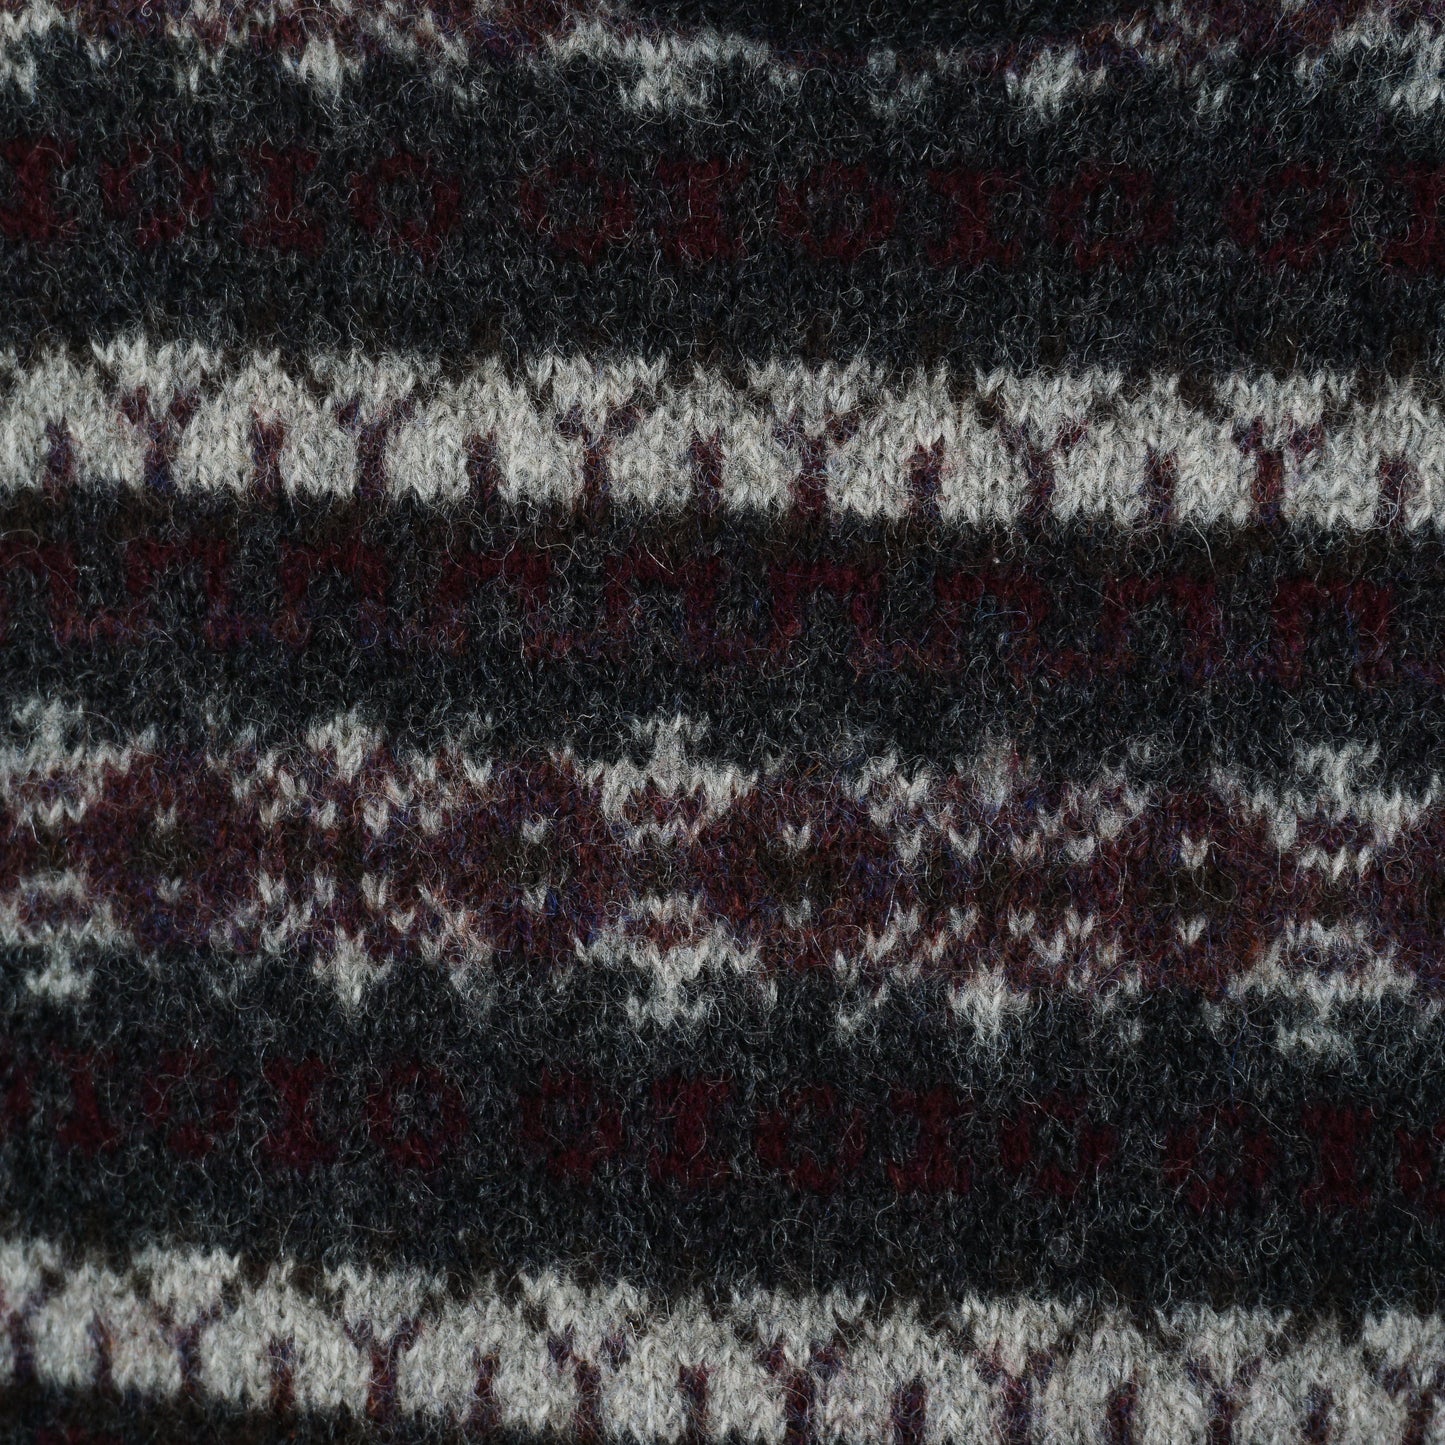 1980s/1990s 100% Wool Sweater (XS)